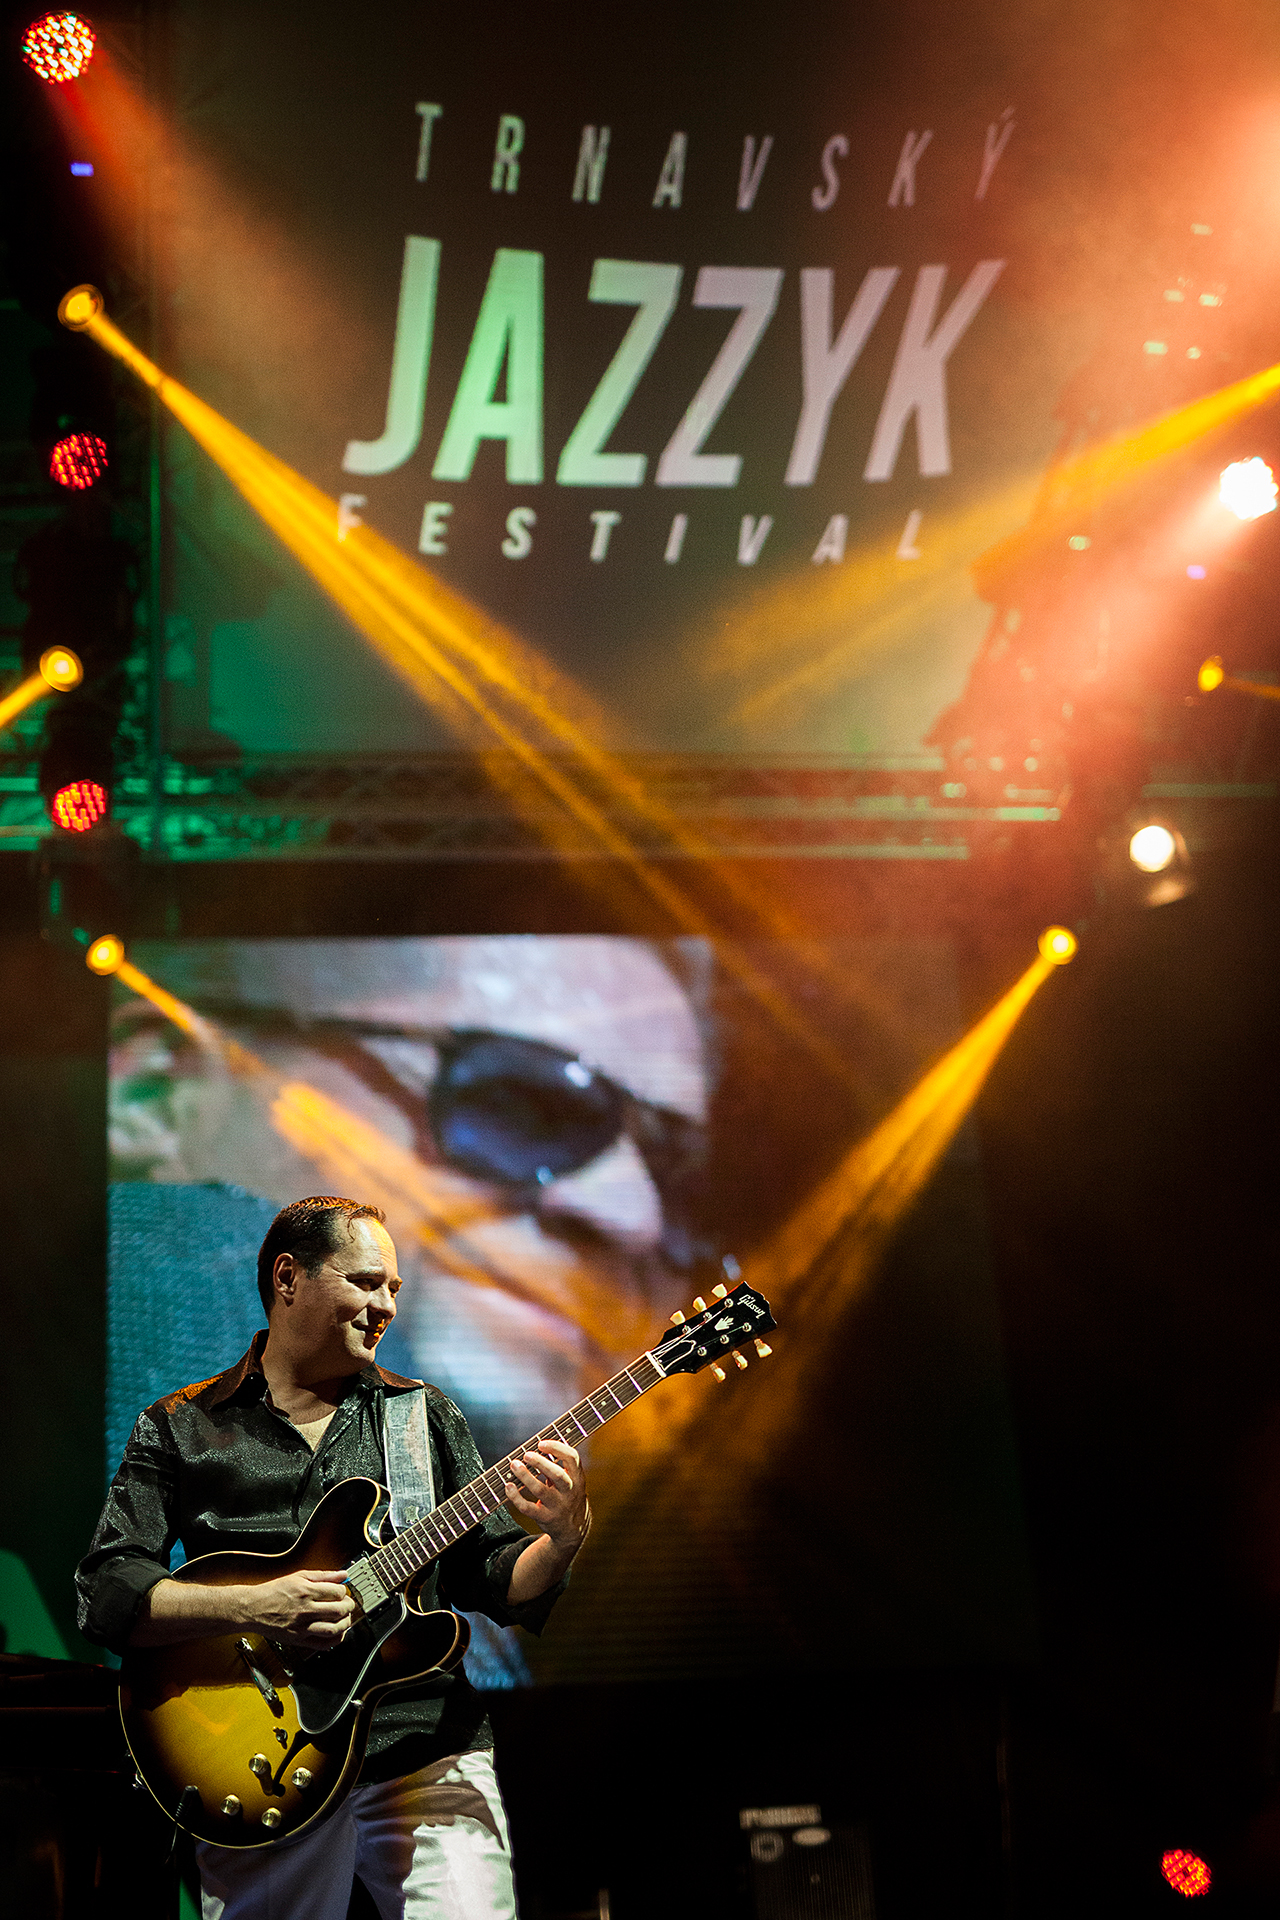 Trnavsk Jazzyk Festival 2017 - 13. ronk